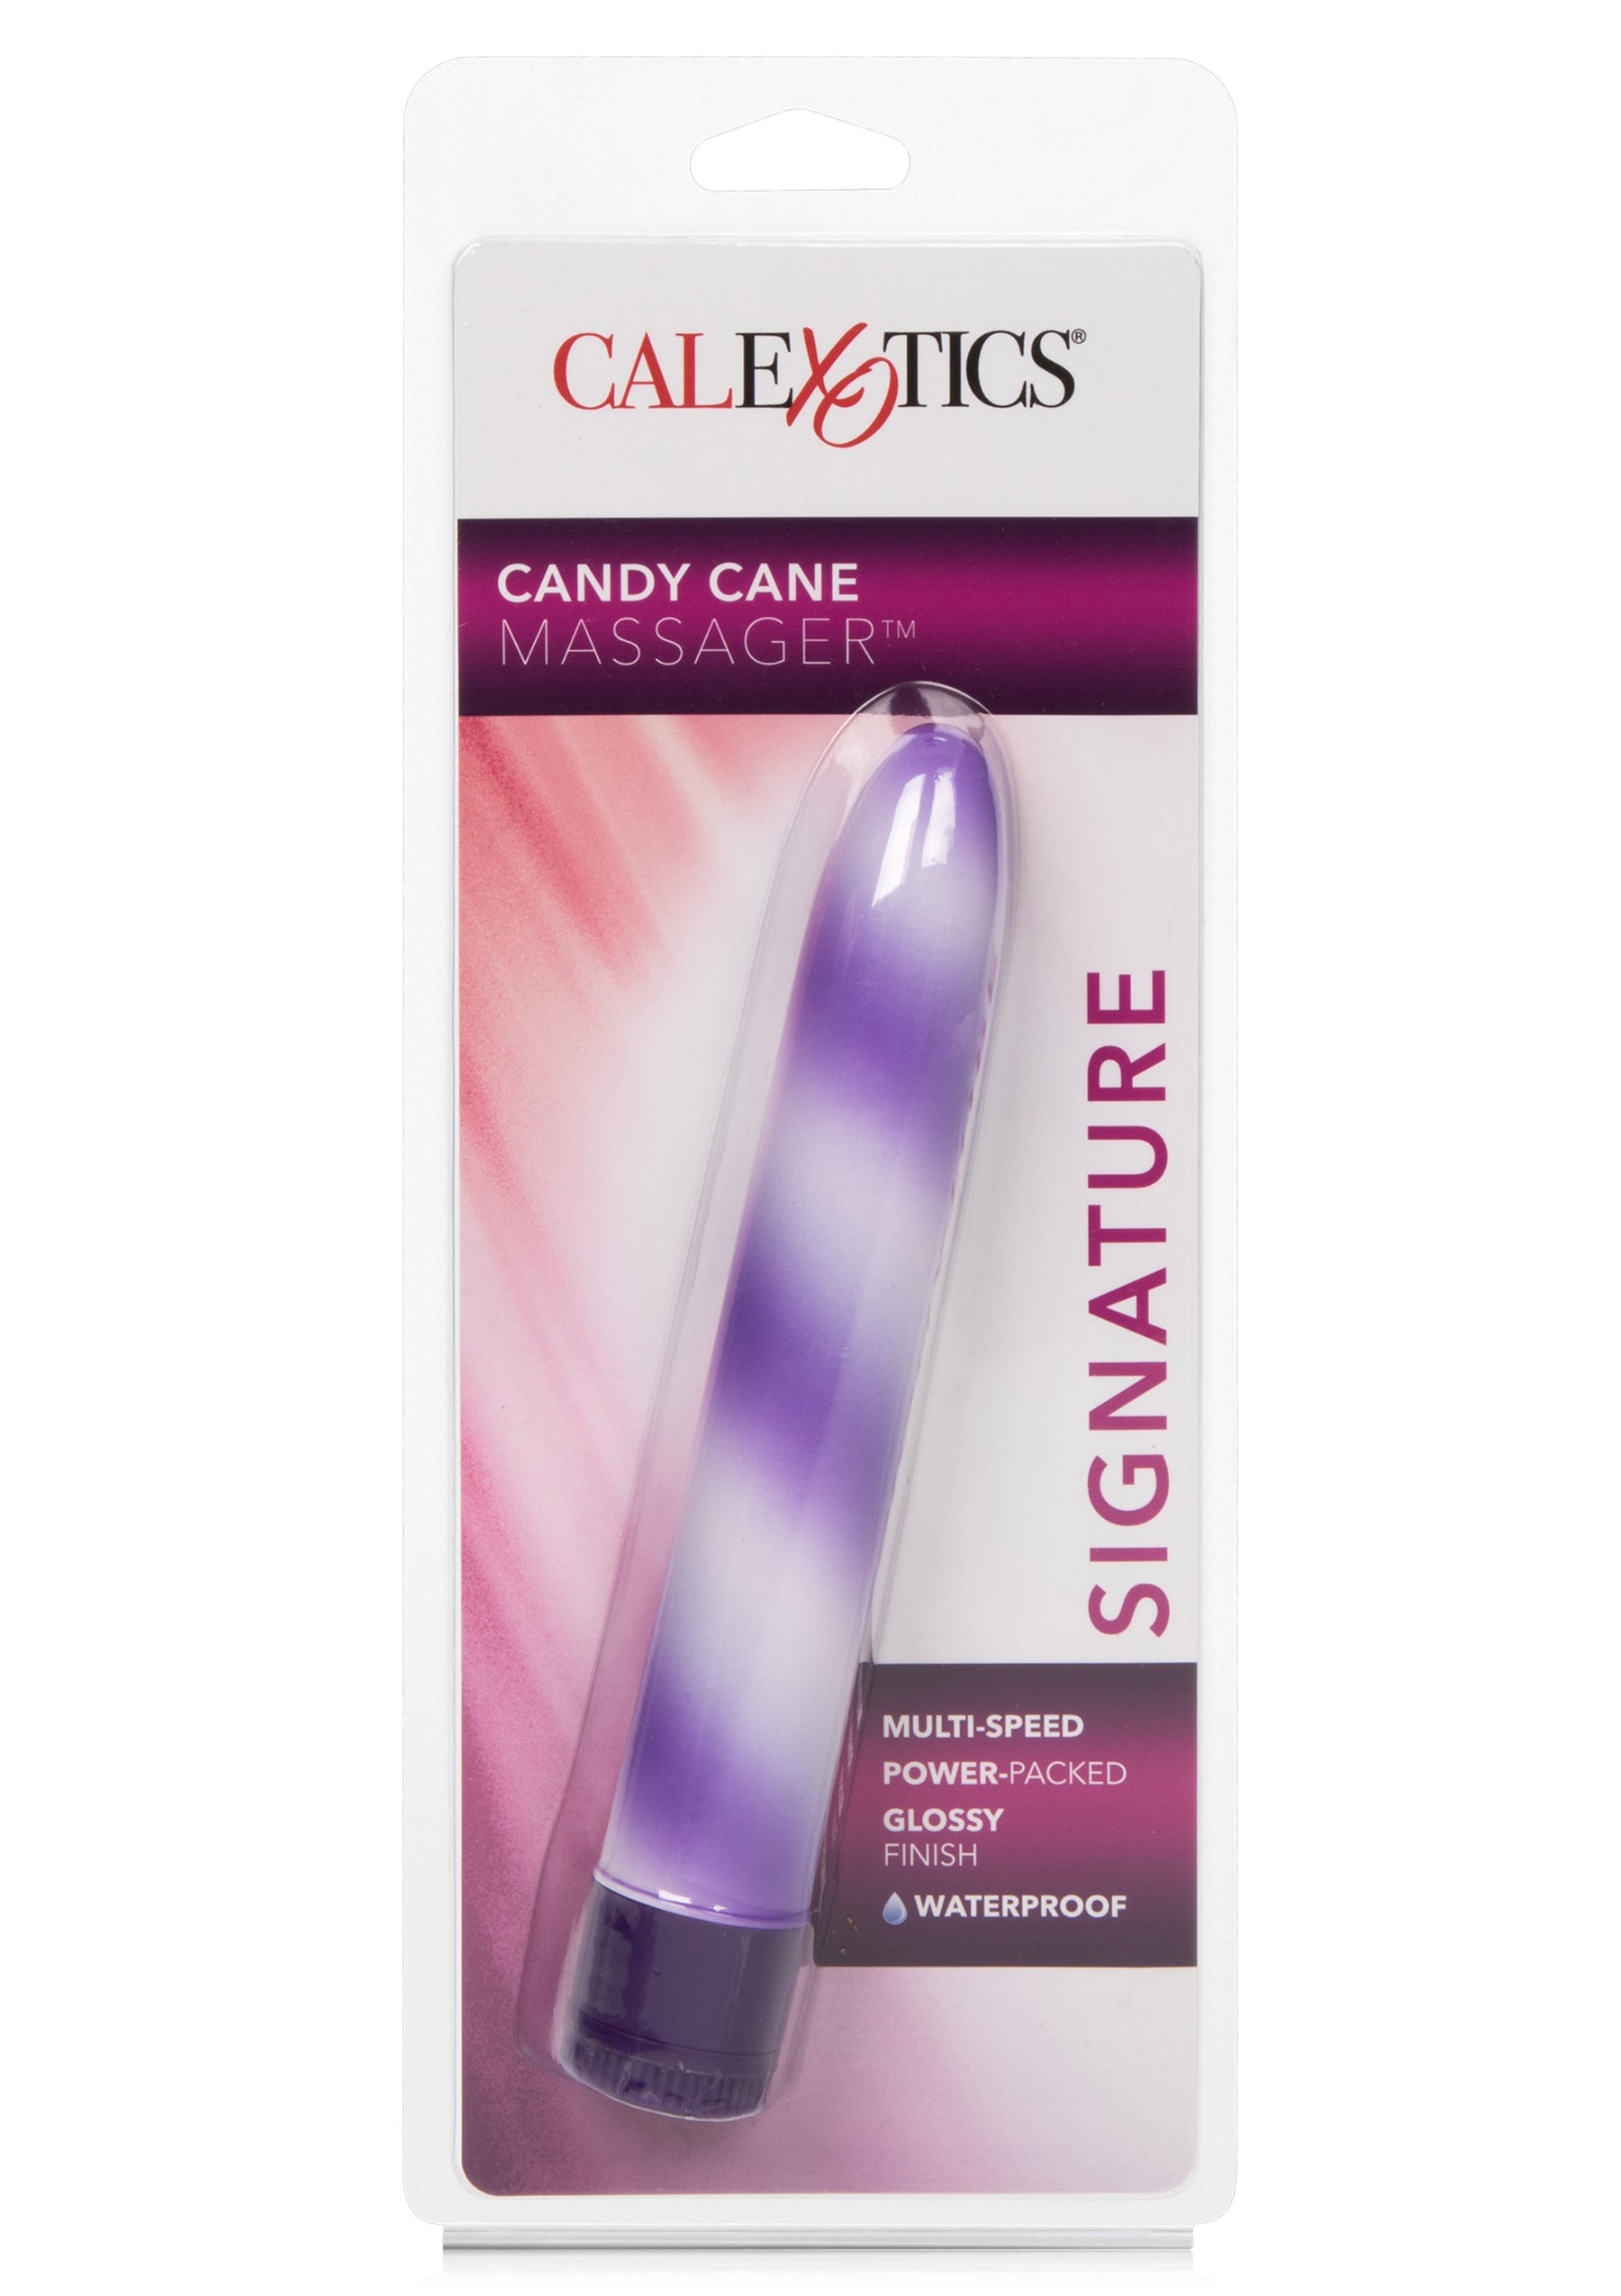 Candy Cane Massager